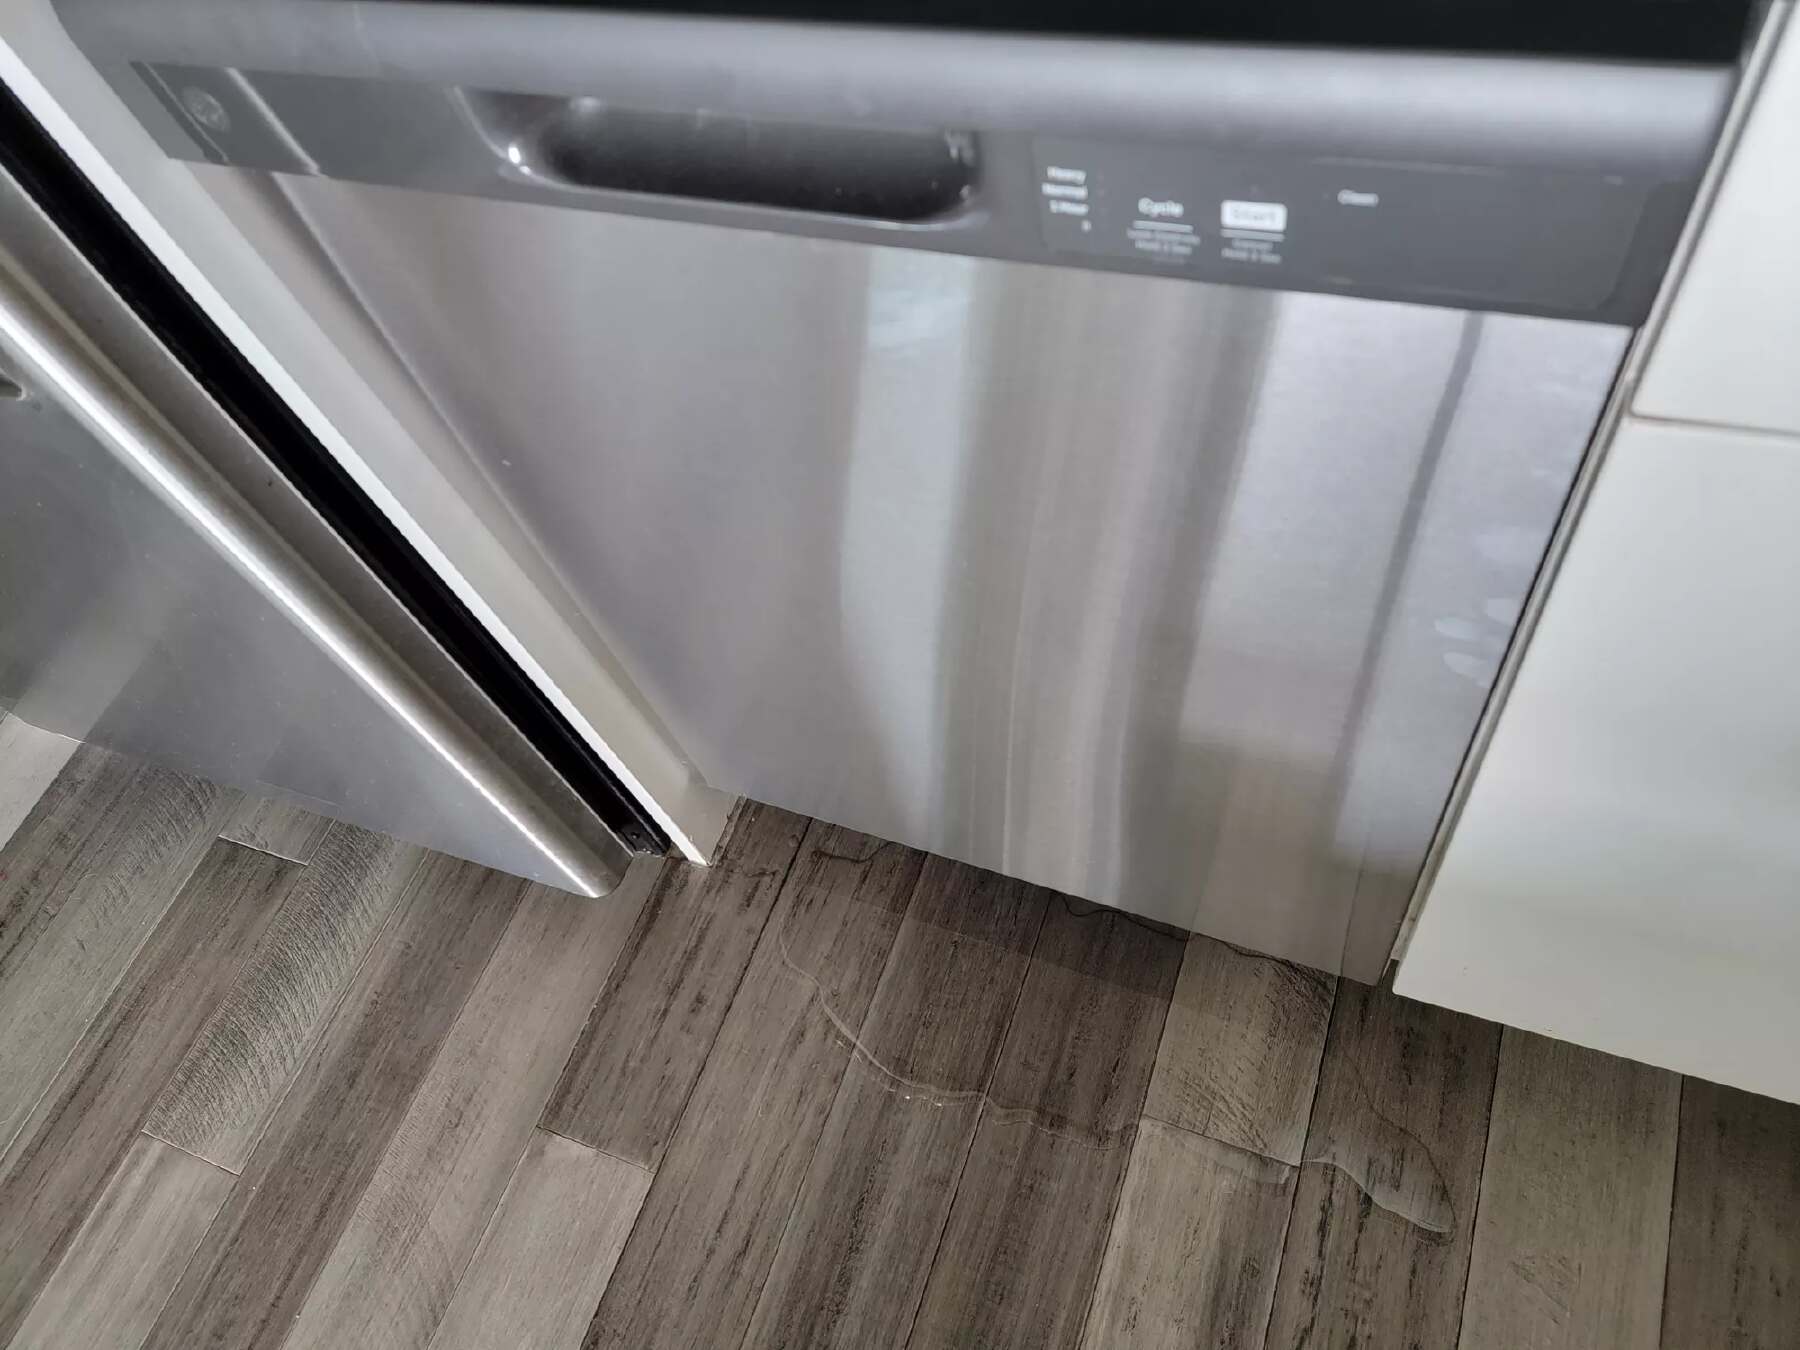 Leaking Dishwasher Repair Part of Thousands in Savings for Homeowner